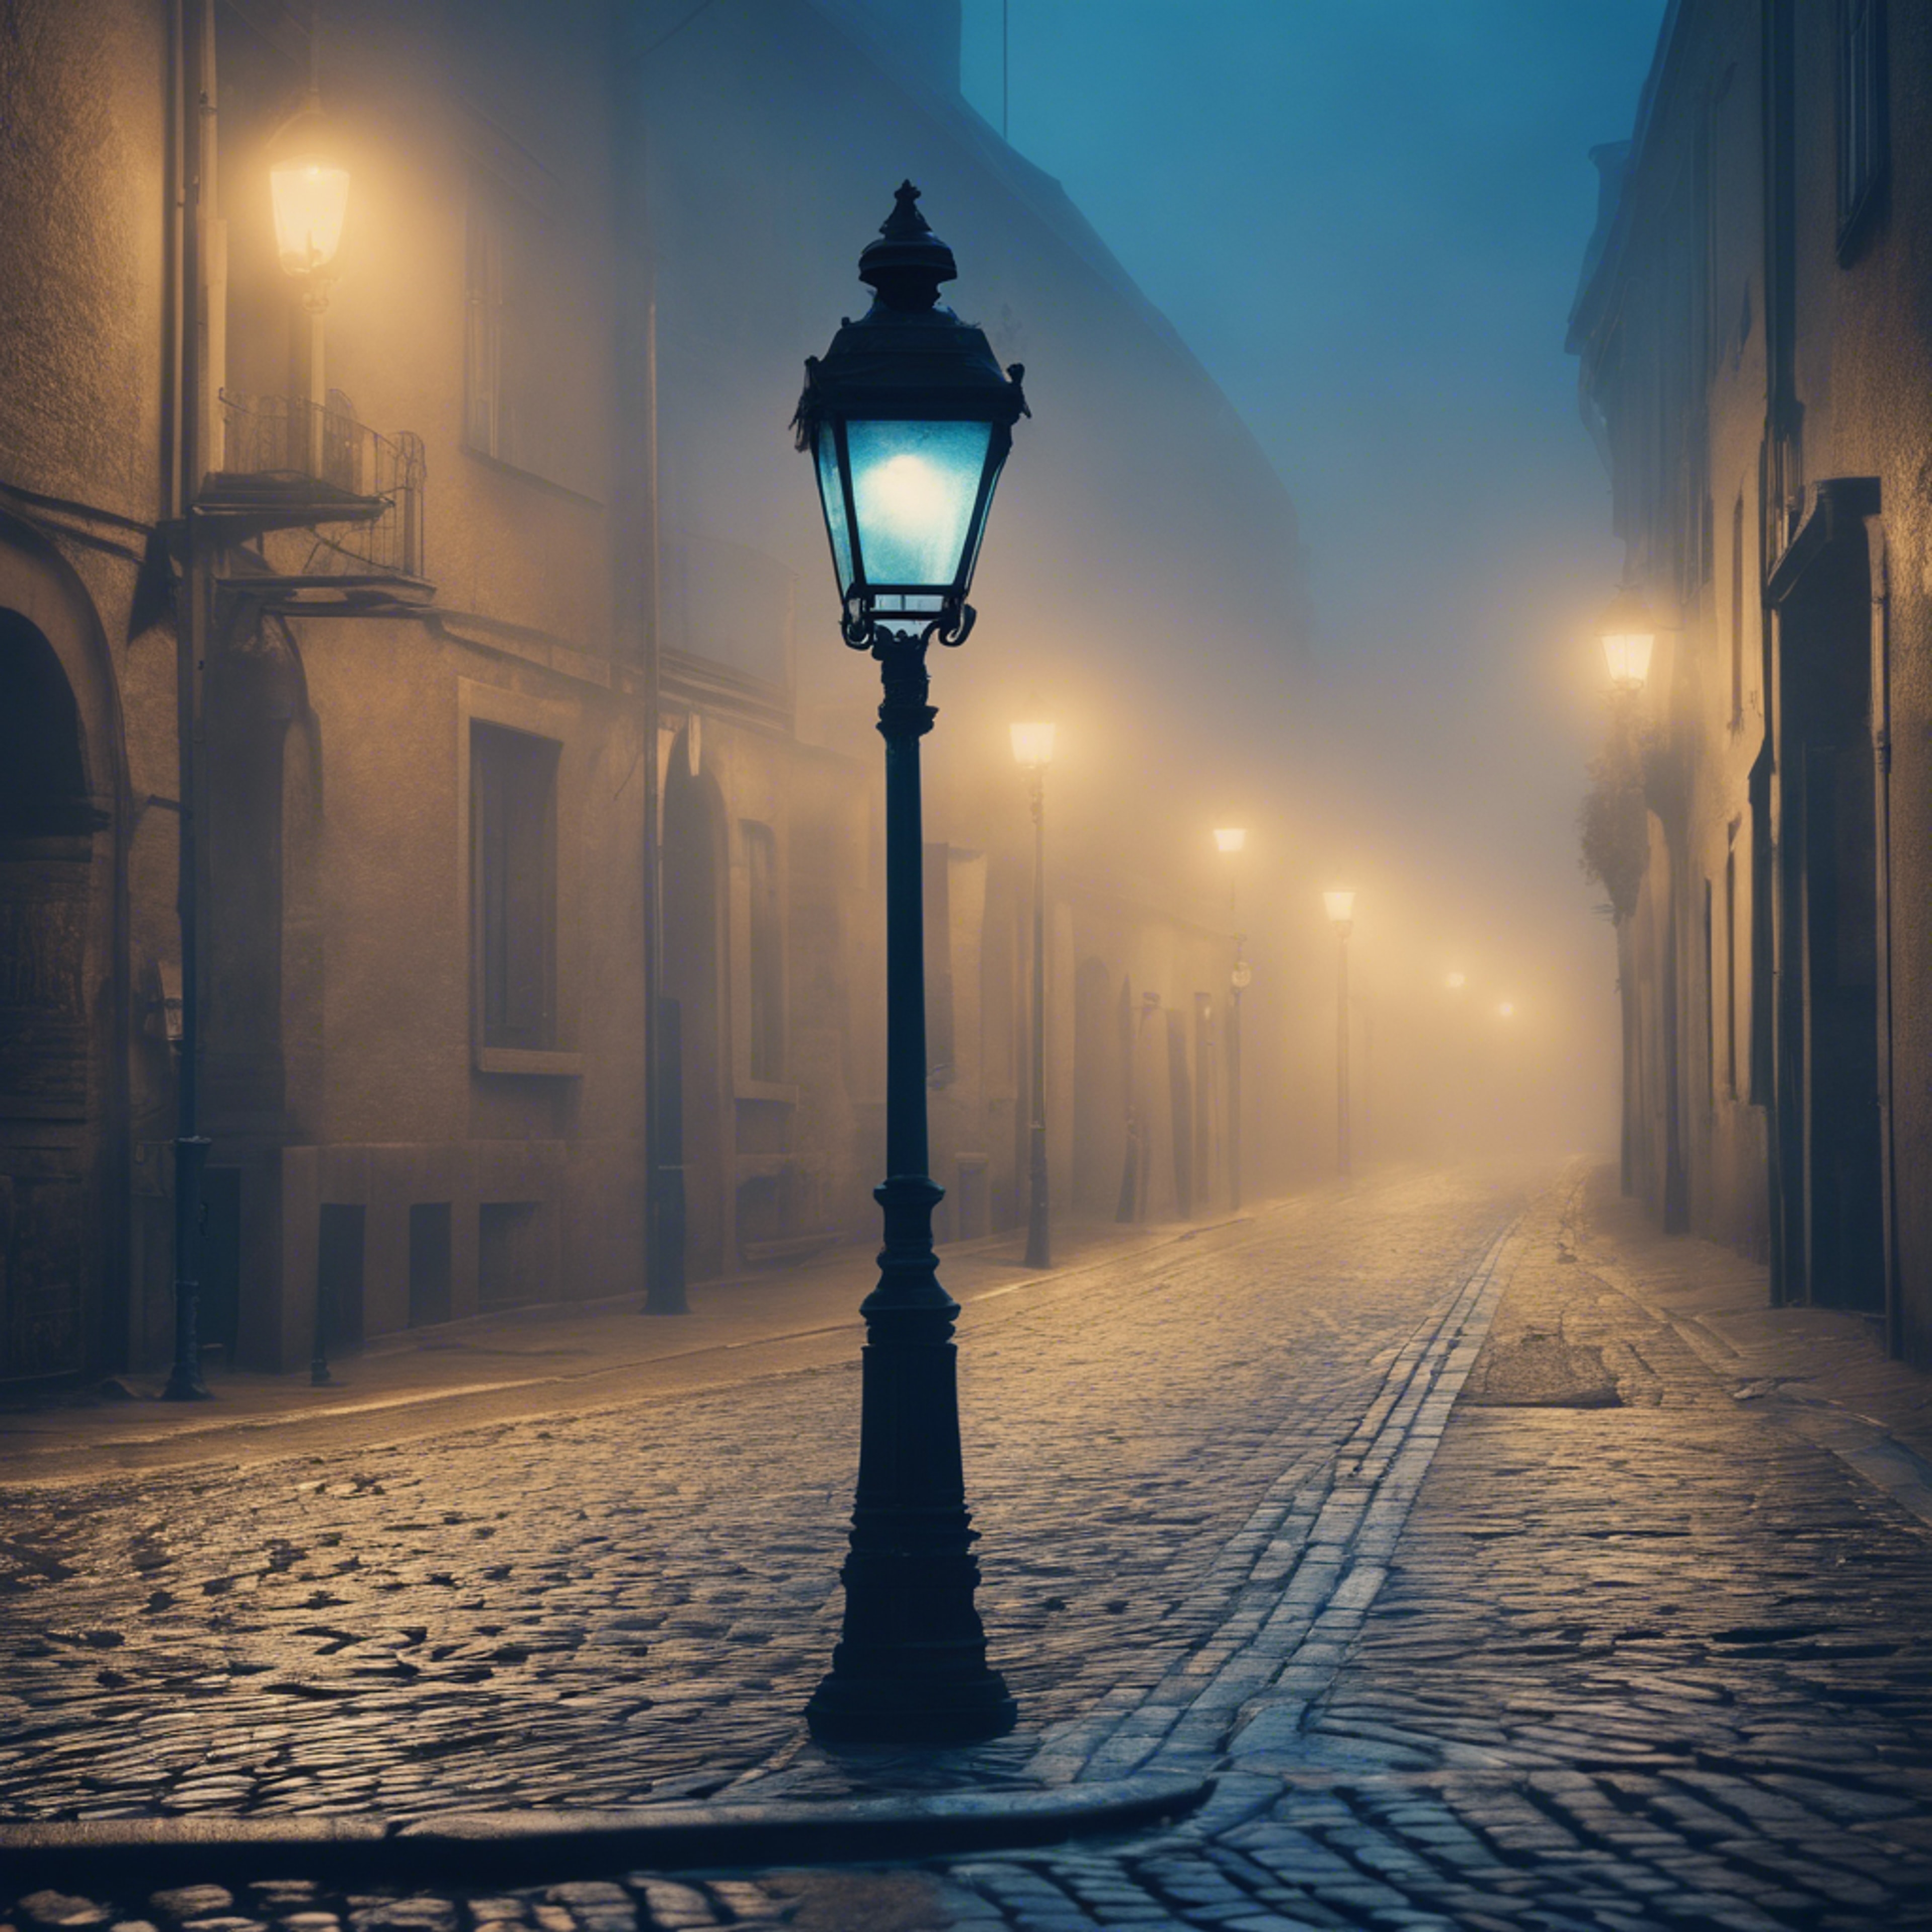 A foggy image of a cobblestone street lit by an old blue lamp post. کاغذ دیواری[86a8420f9b4d45a484bd]